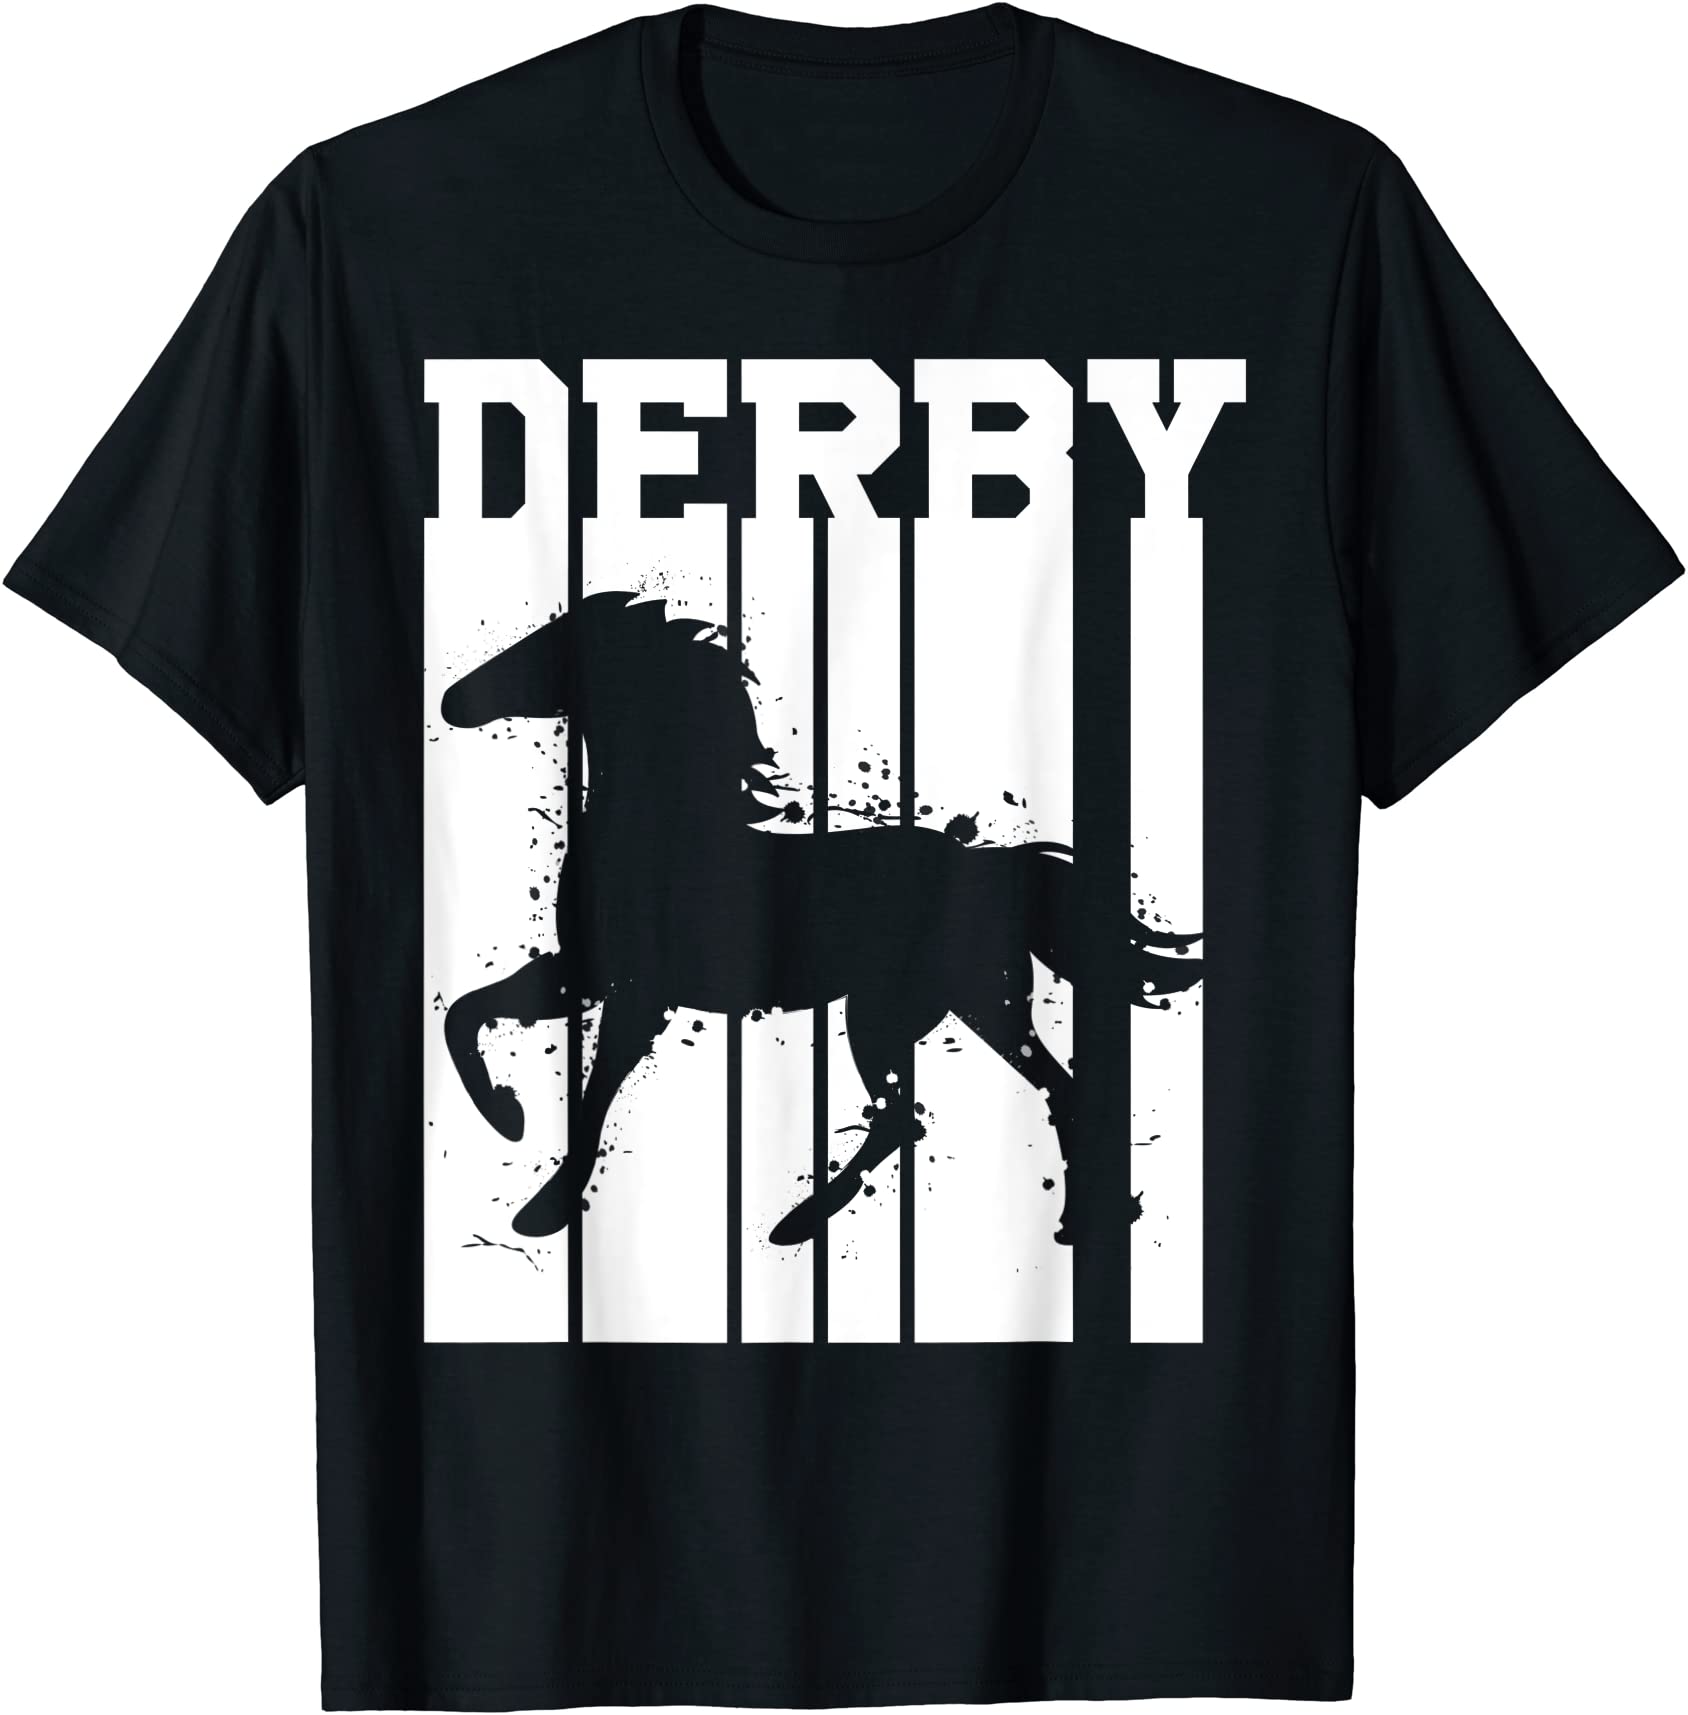 retro artistic derby horse racing tshirt men - Buy t-shirt designs